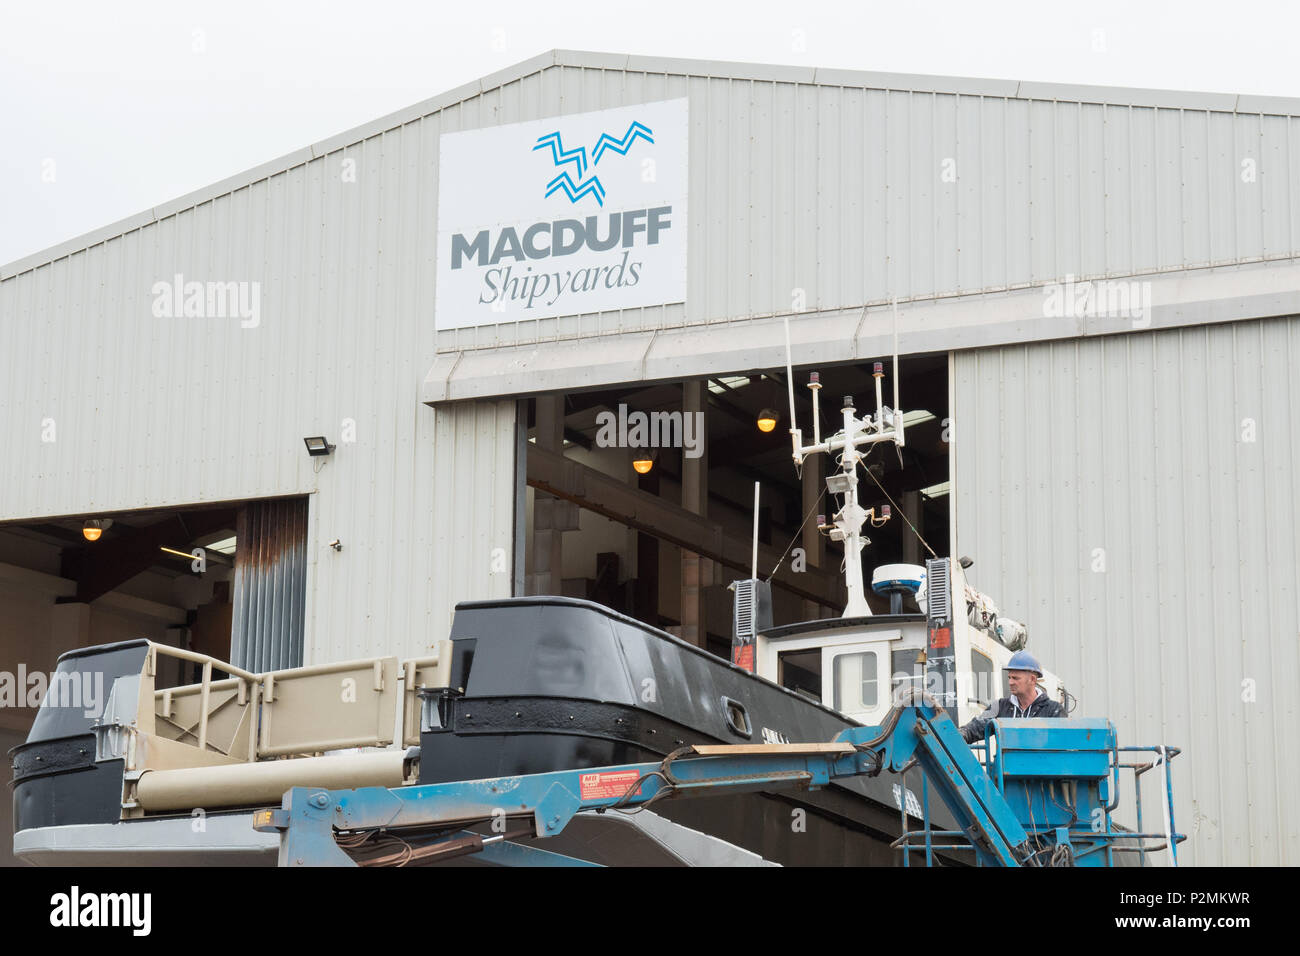 MacDuff shipyard, Buckie, Moray, Ecosse, Royaume-Uni Banque D'Images